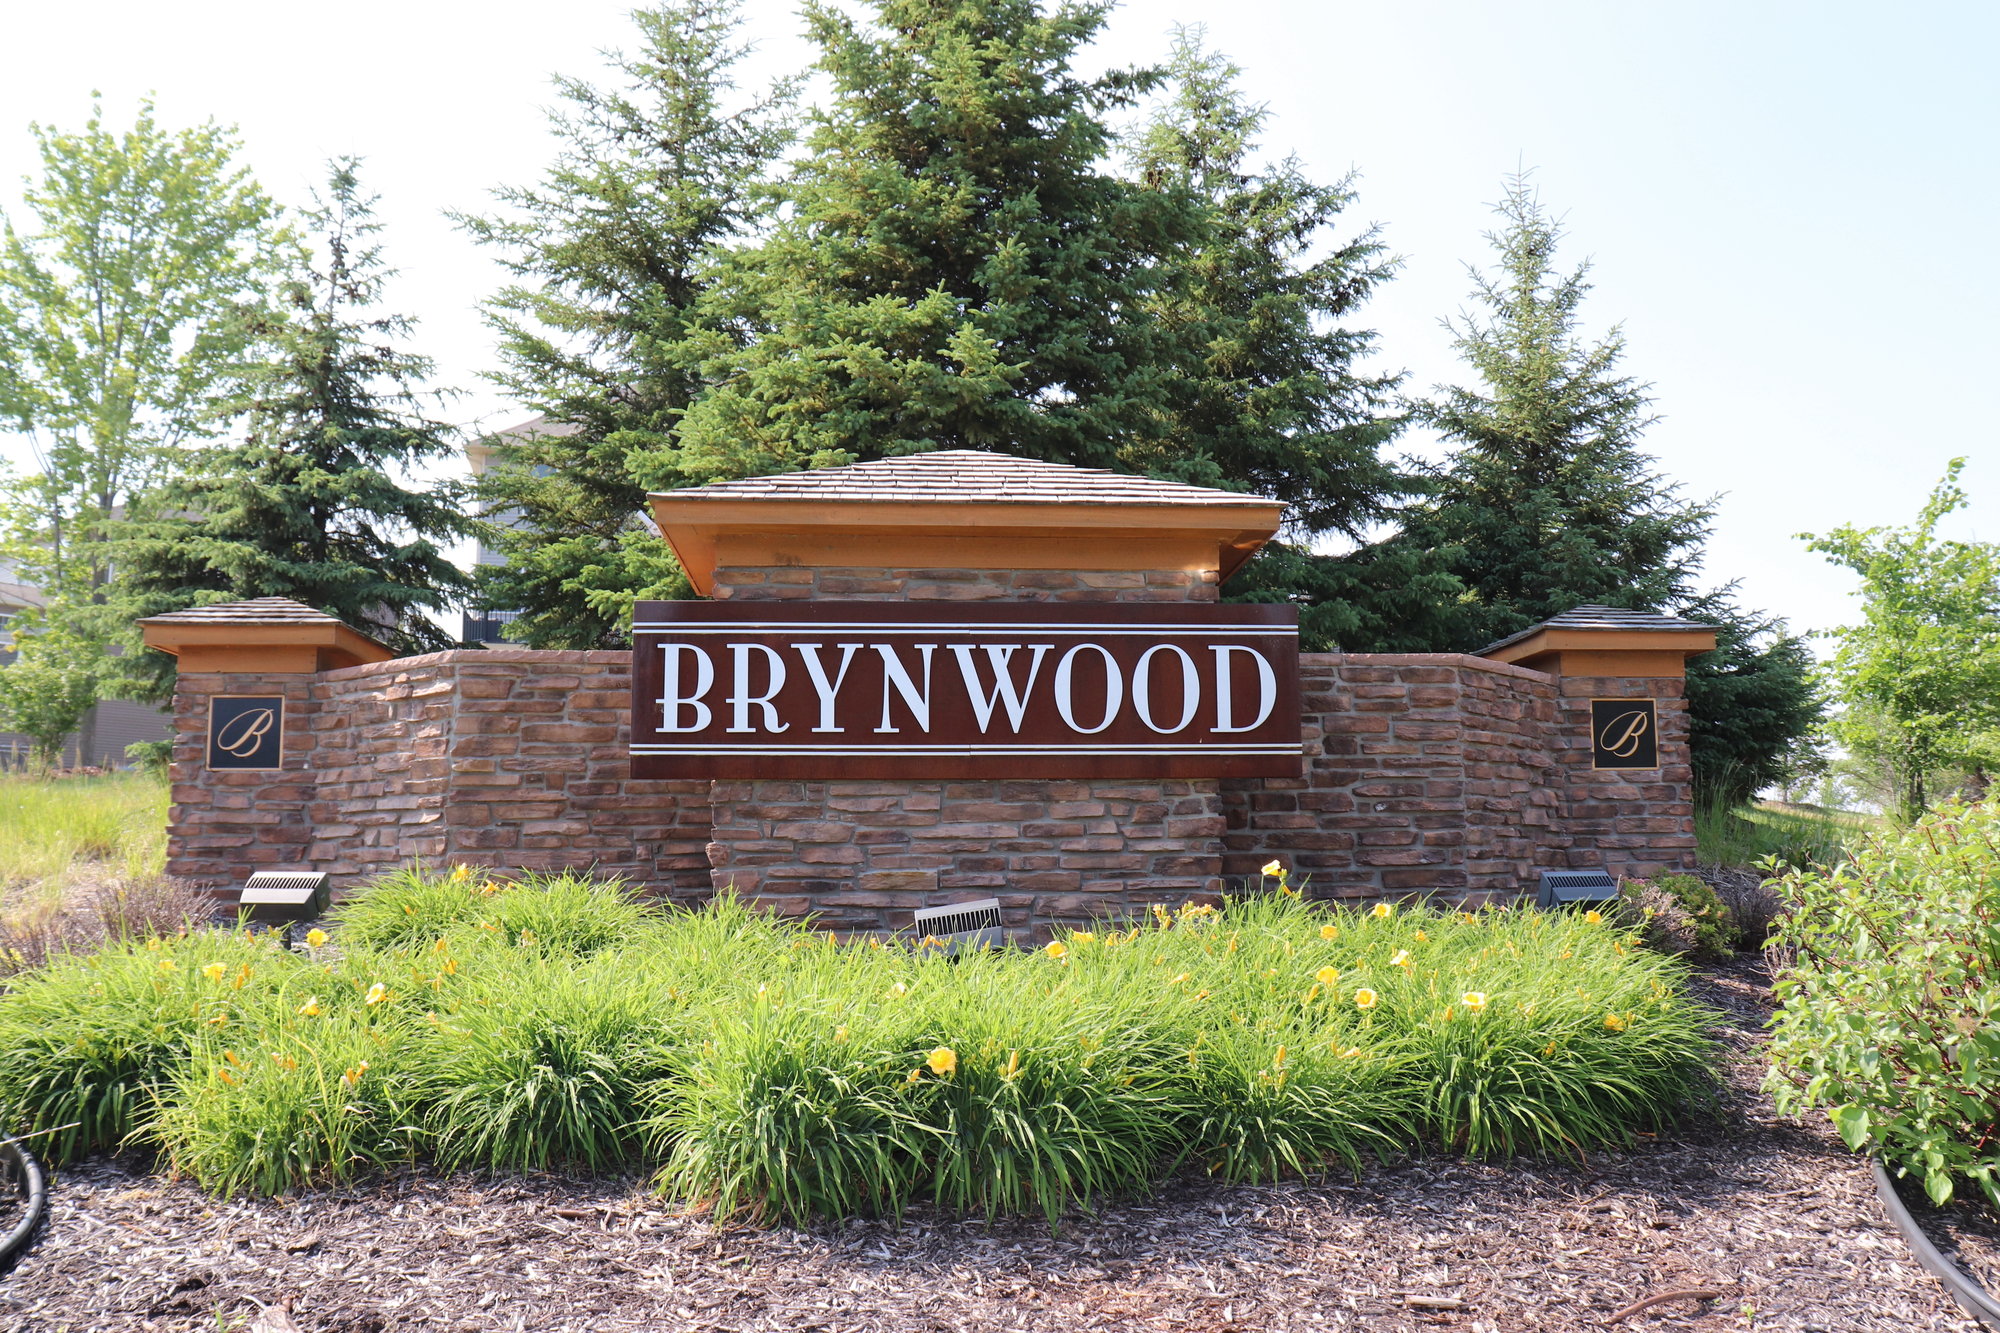 Brynwood